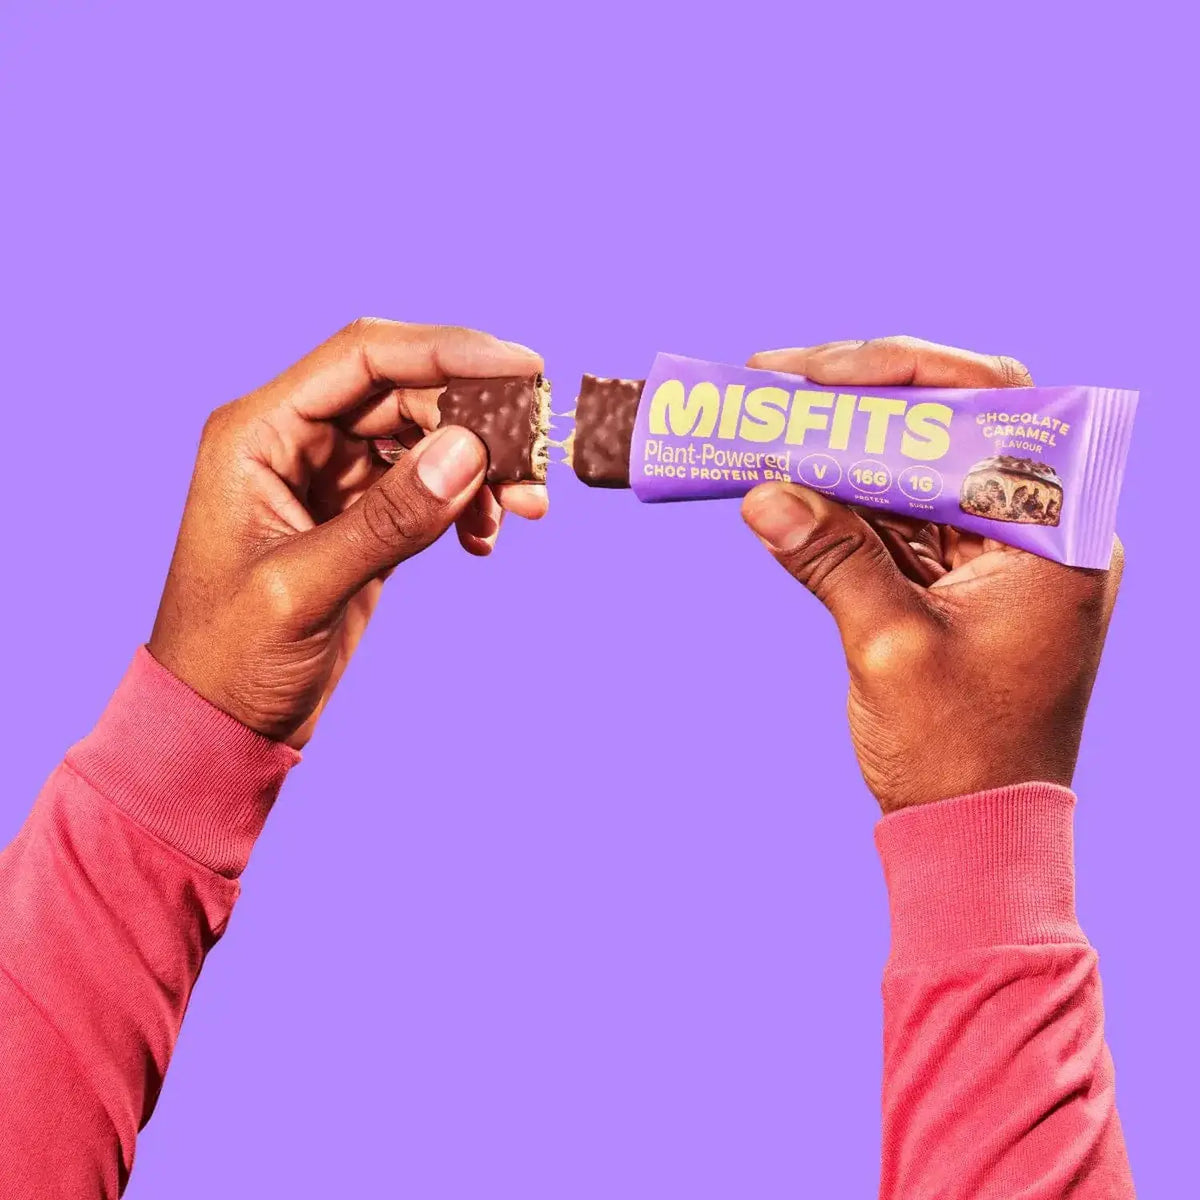 Misfits Misfits Vegan Protein Bar 12 x 45 g Chocolate Caramel kaufen bei HighPowered.ch